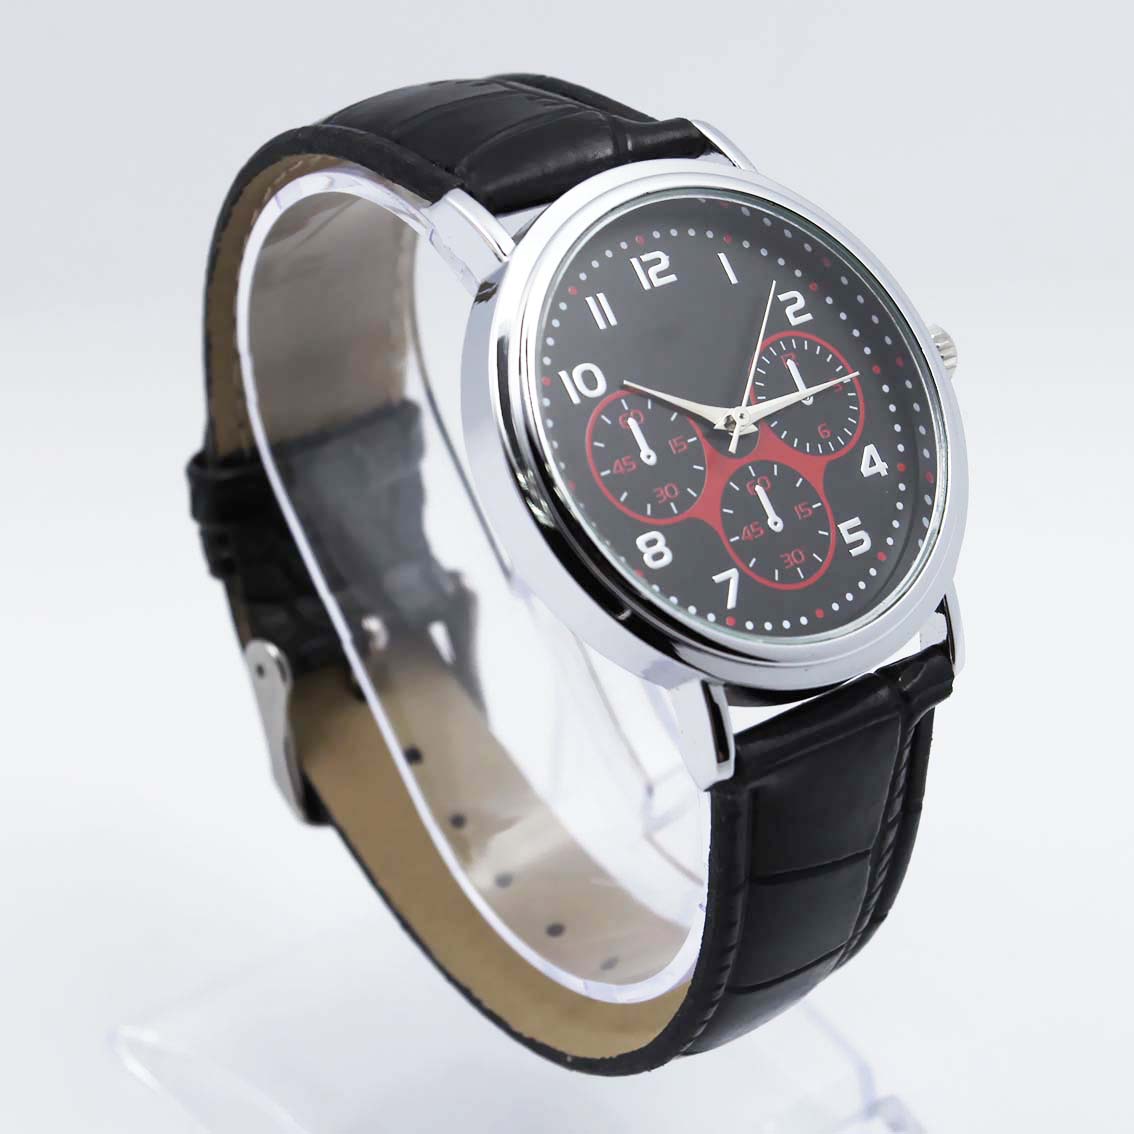 #02112Men's wristwatch quartz analog leather strap watch